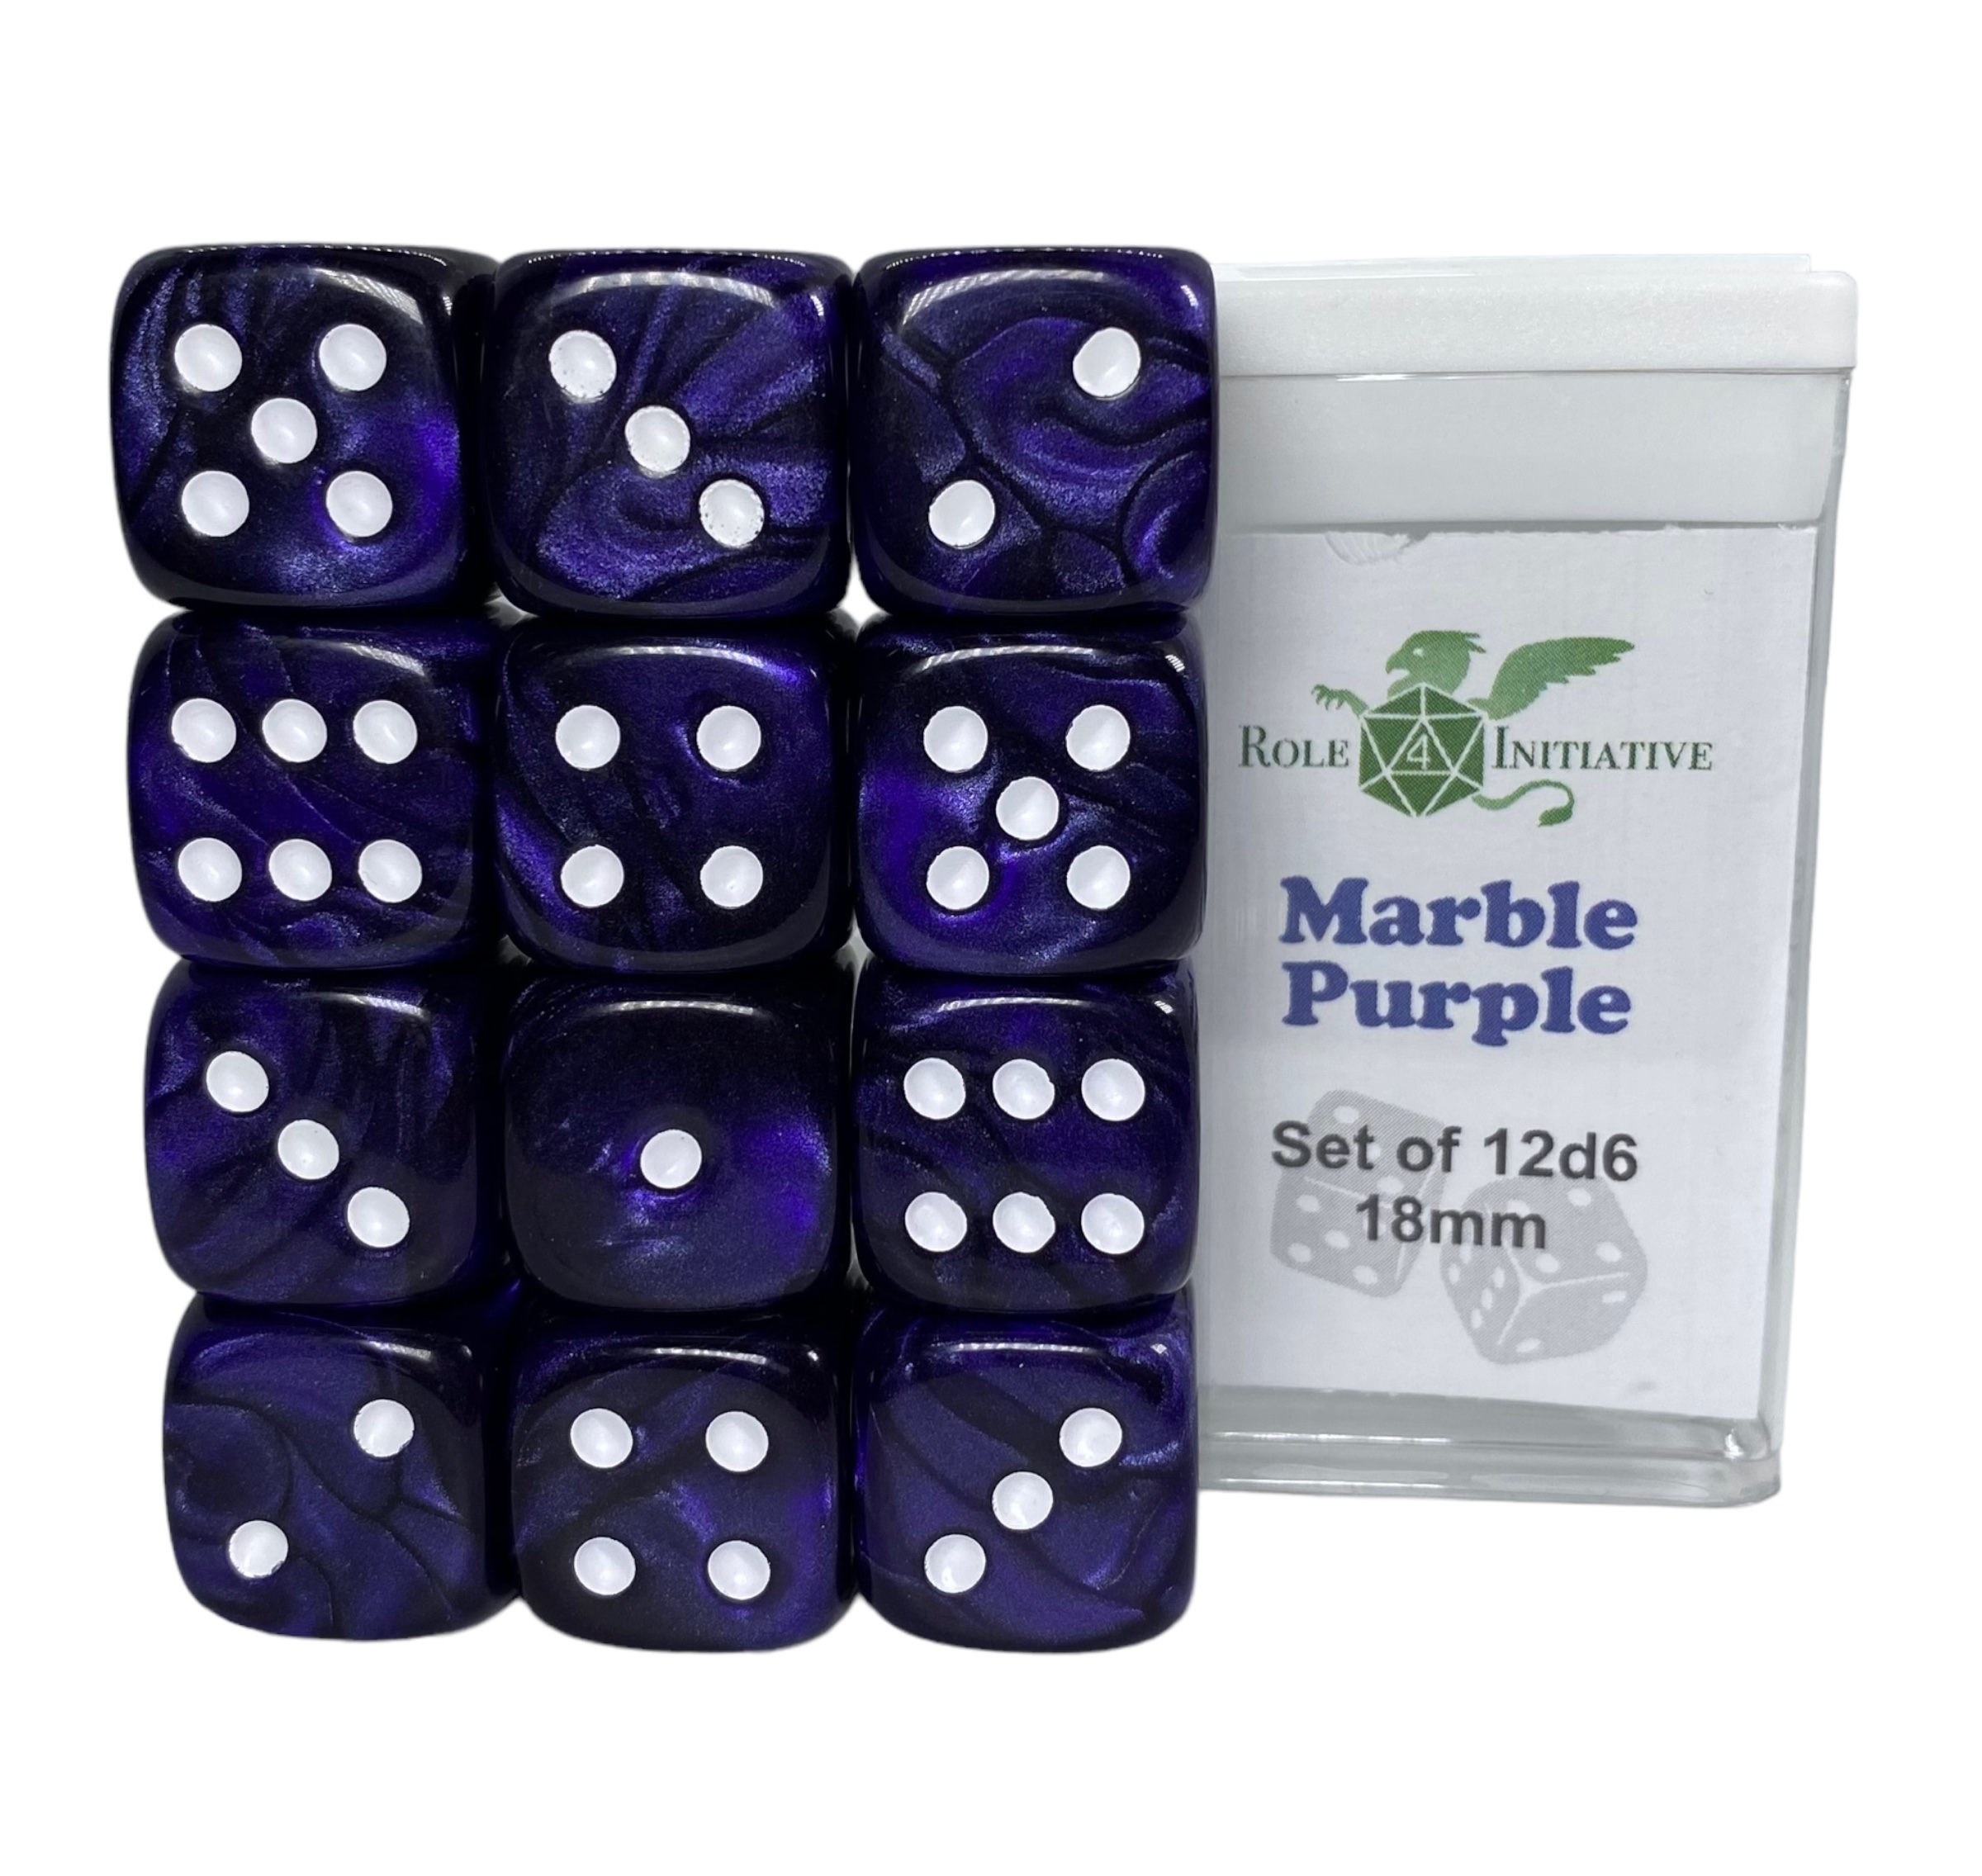 Role 4 Initiative: 12 D6 Pips Dice Set: Marble Purple 18MM 